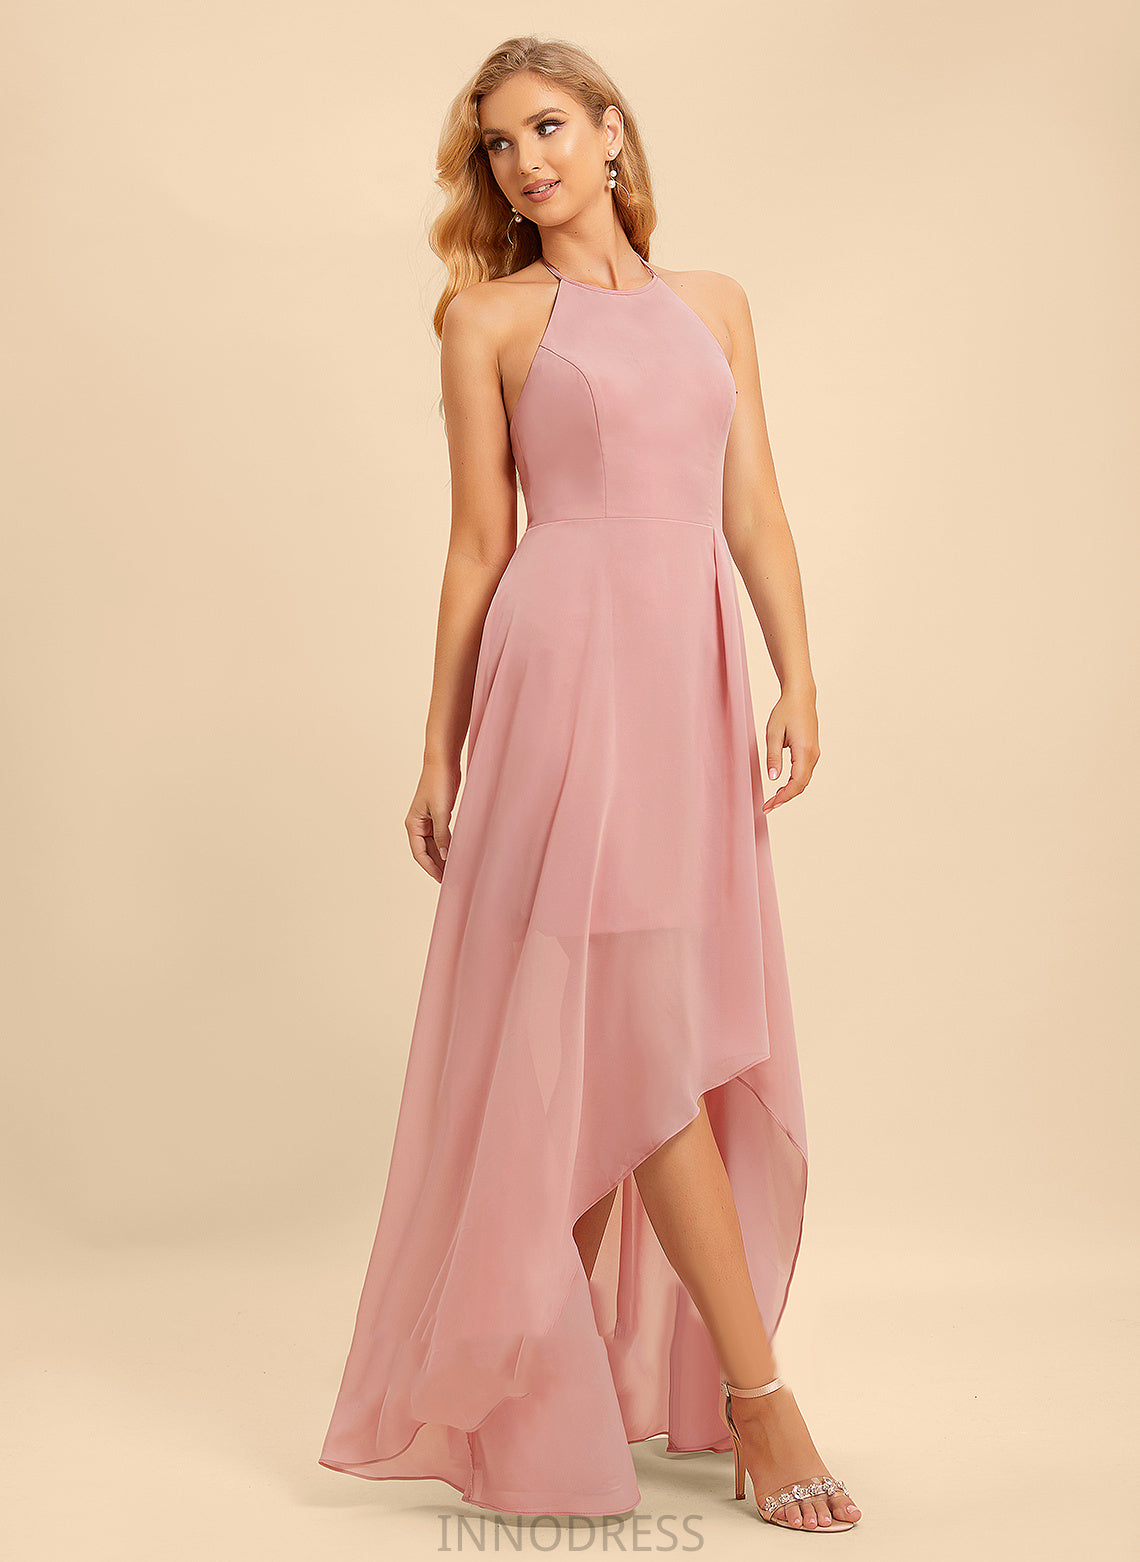 Neckline Asymmetrical Silhouette A-Line Length Ruffle Embellishment Fabric Halter Madge Straps Sleeveless Bridesmaid Dresses